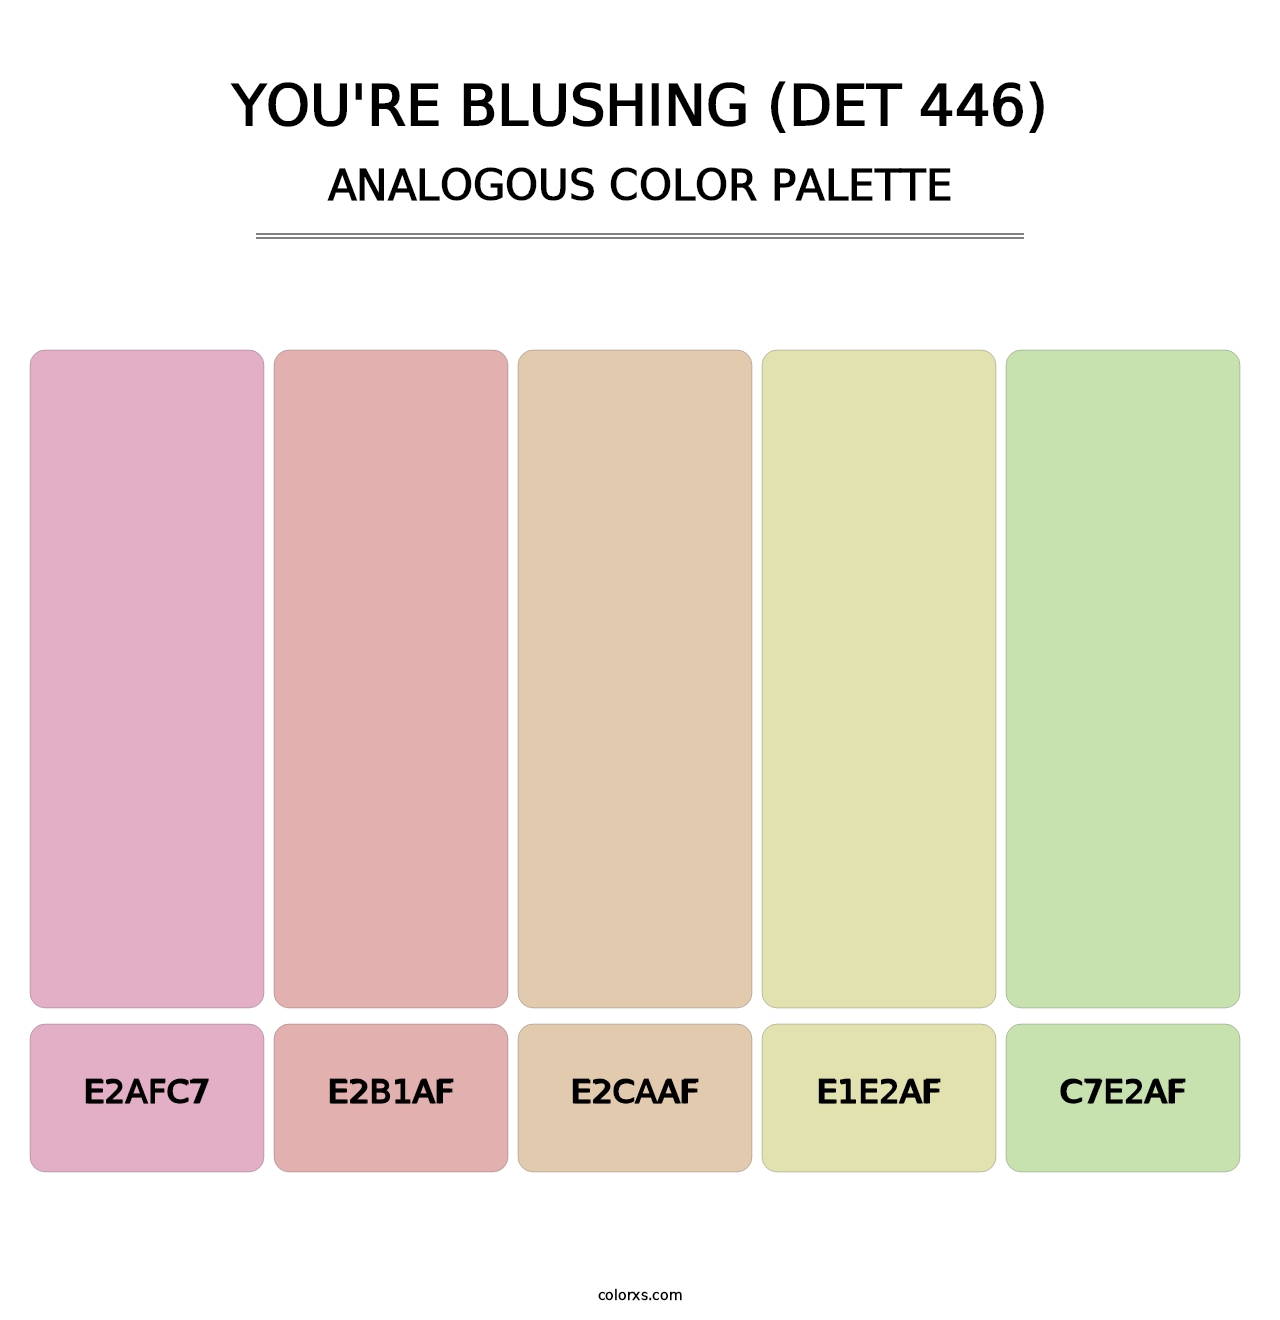 You're Blushing (DET 446) - Analogous Color Palette